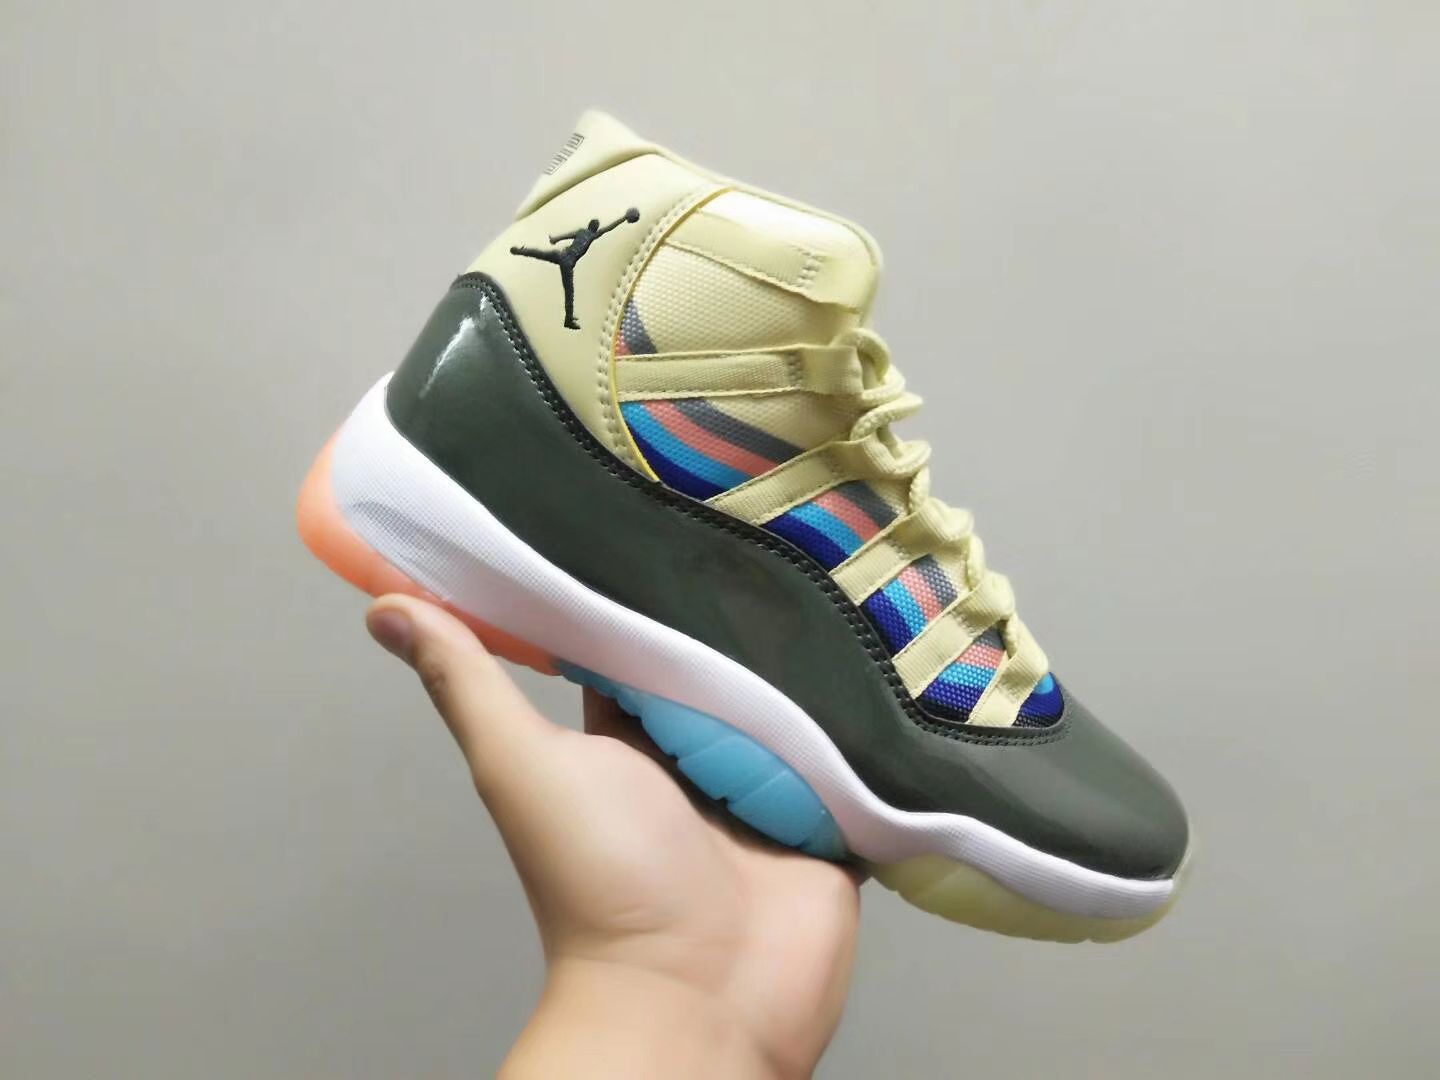 New Air Jordan 11 3D Colorful Shoes - Click Image to Close